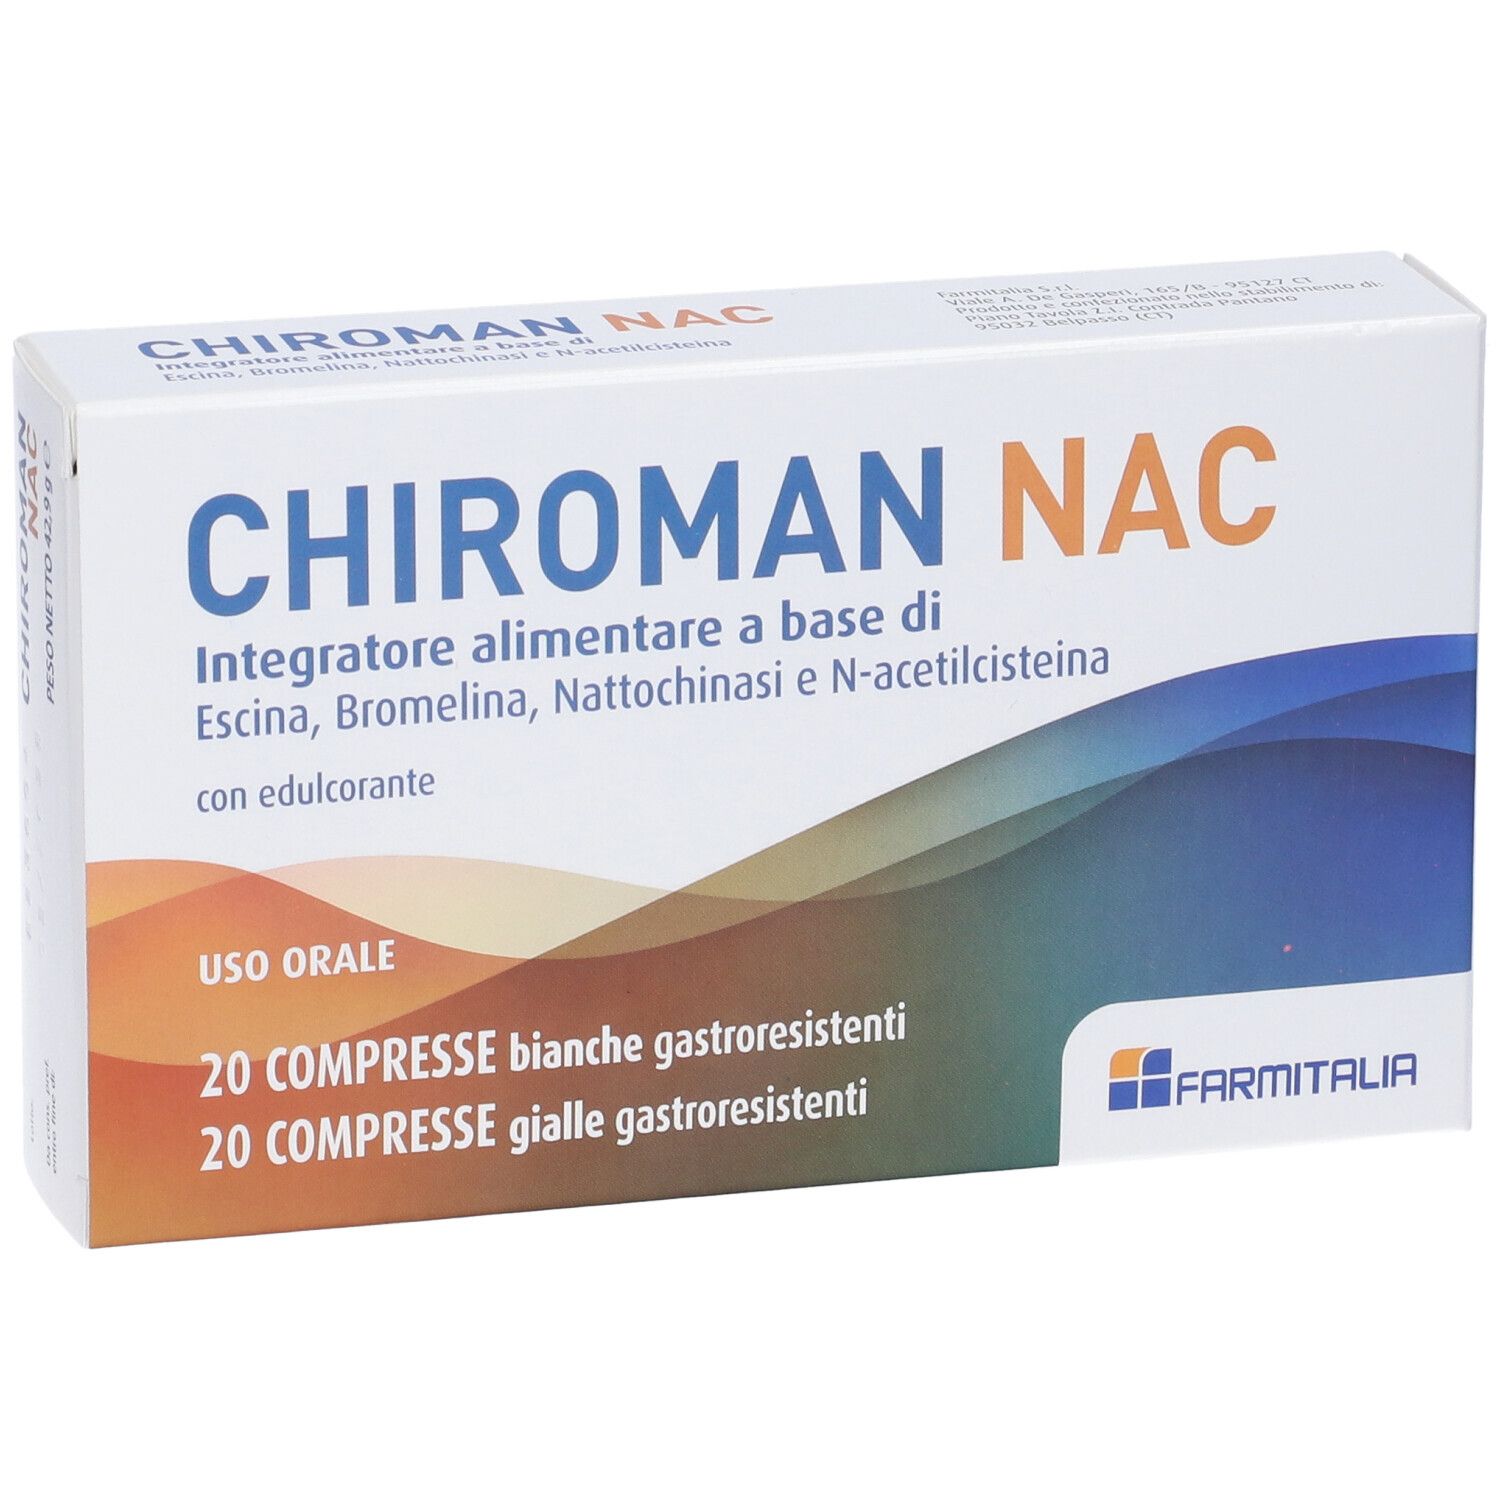 CHIROMAN NAC